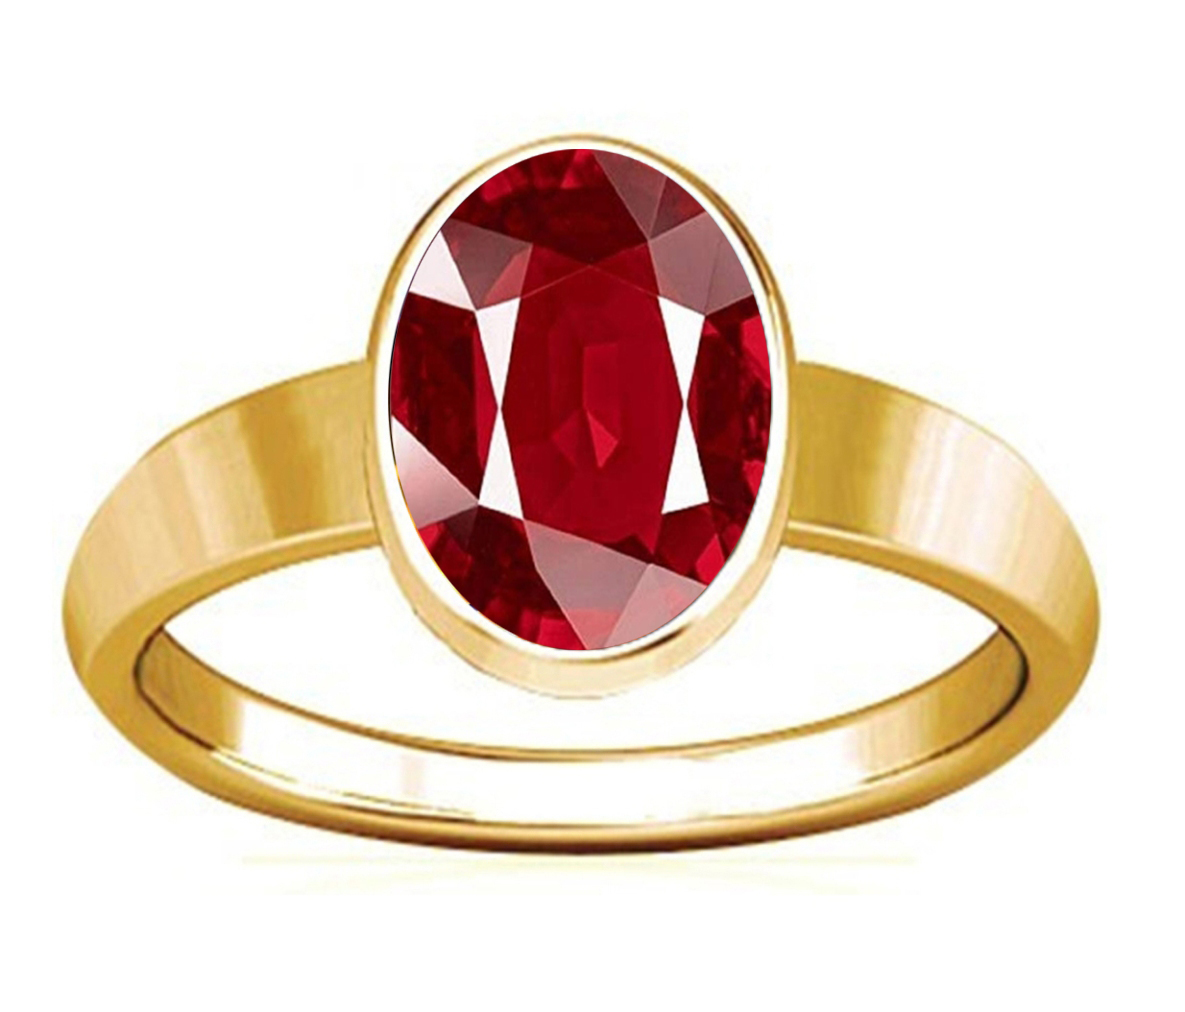 Buy kanishkaarts 8.25 Ratti Natural Certified Gold Ruby Manik Gemstone Panchdhatu  Ring for Men and Women at Amazon.in